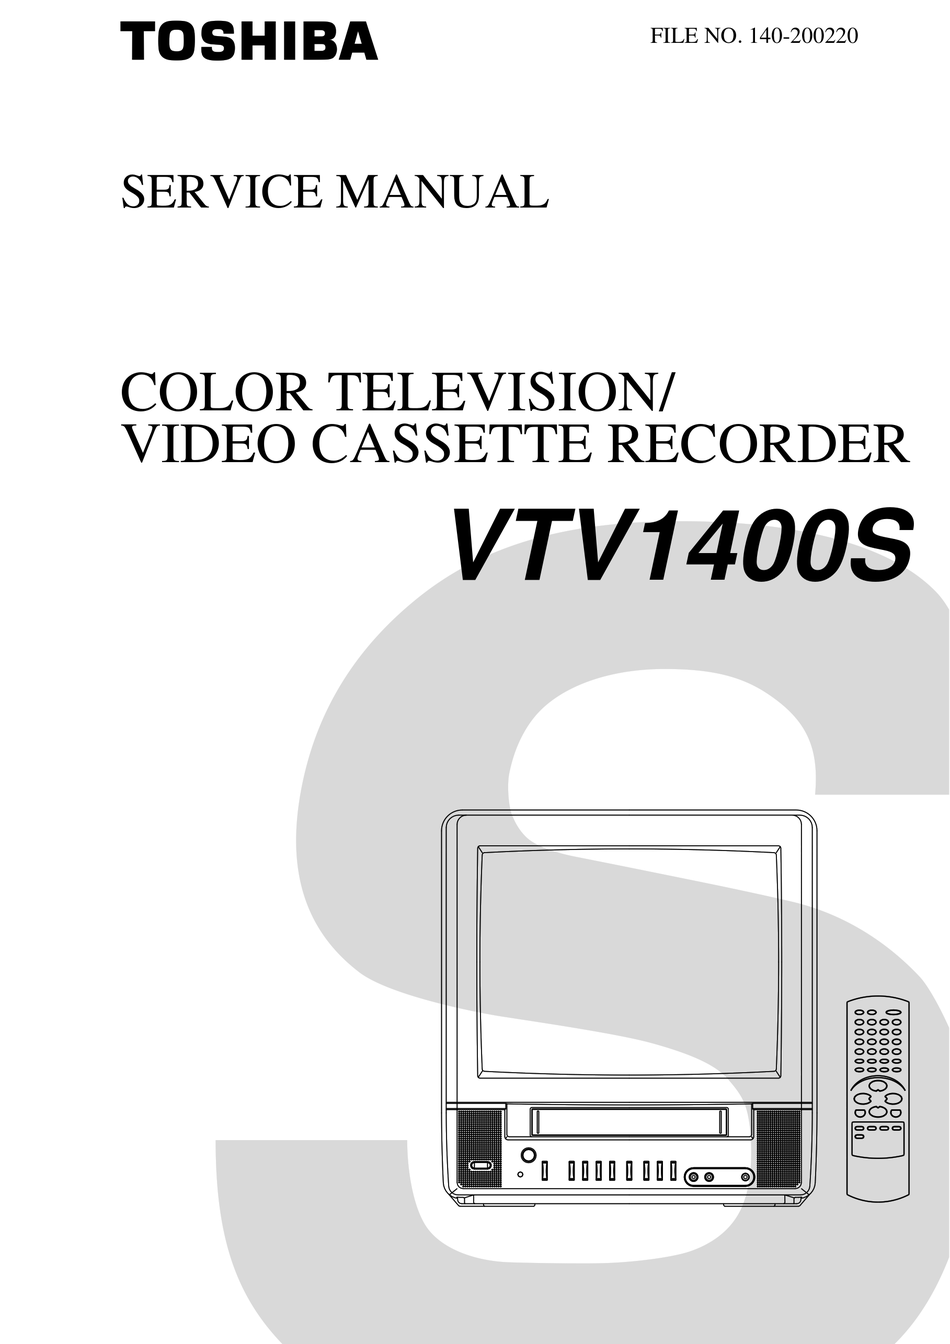 TOSHIBA VTV1400S SERVICE MANUAL Pdf Download | ManualsLib